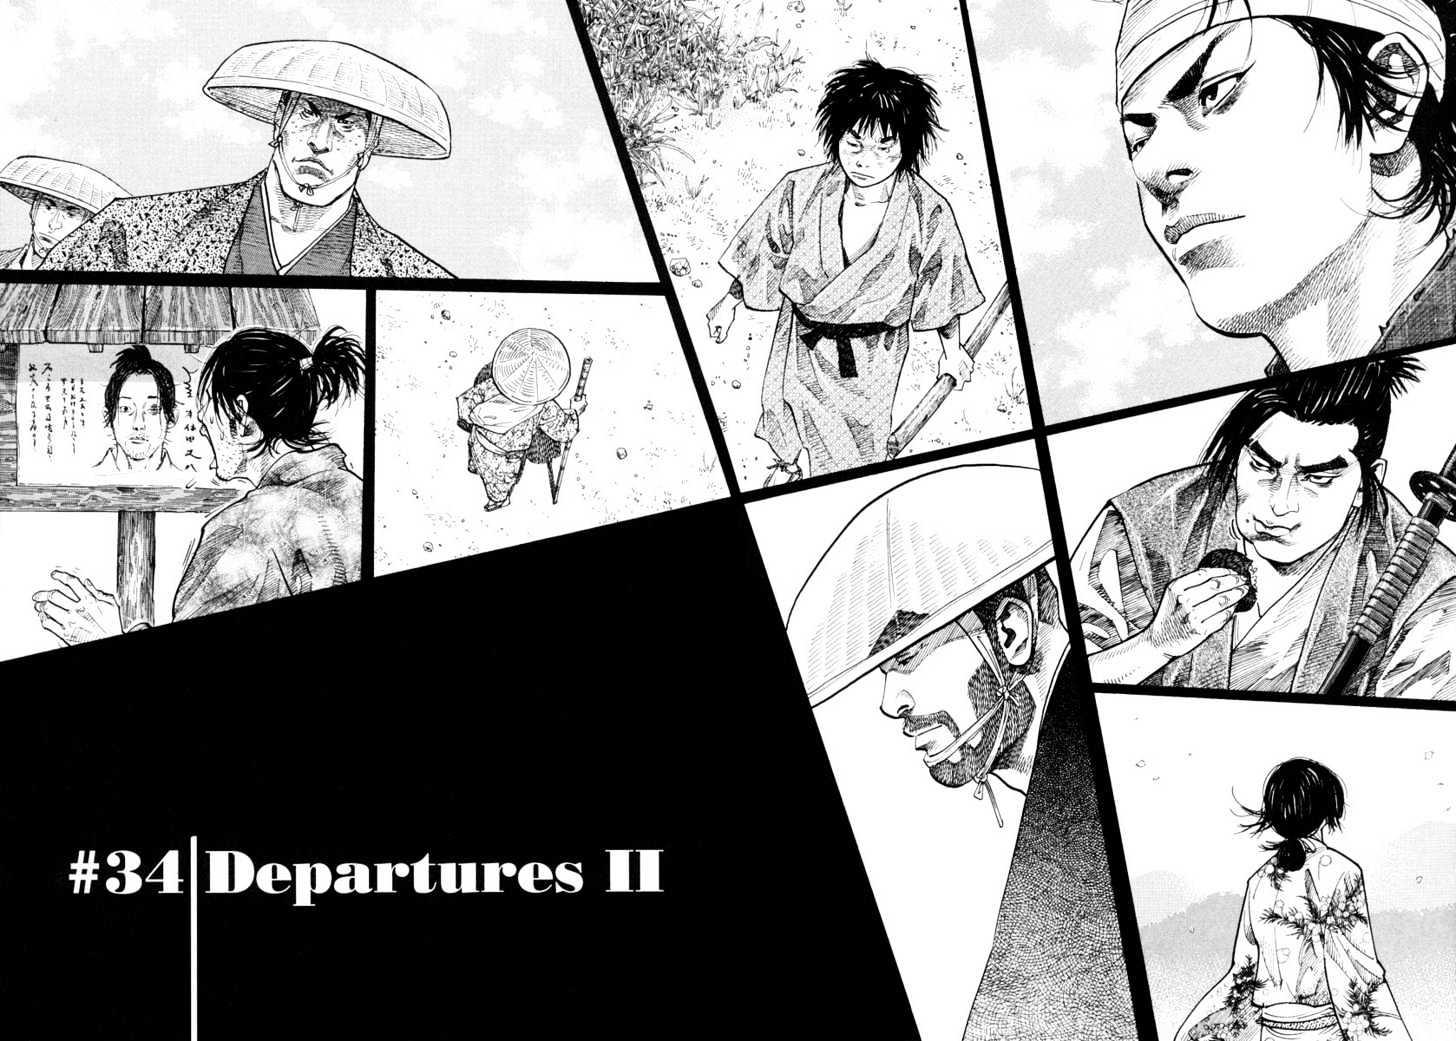 Vagabond Vol.4 Chapter 34 : Departures Ii page 4 - Mangakakalot